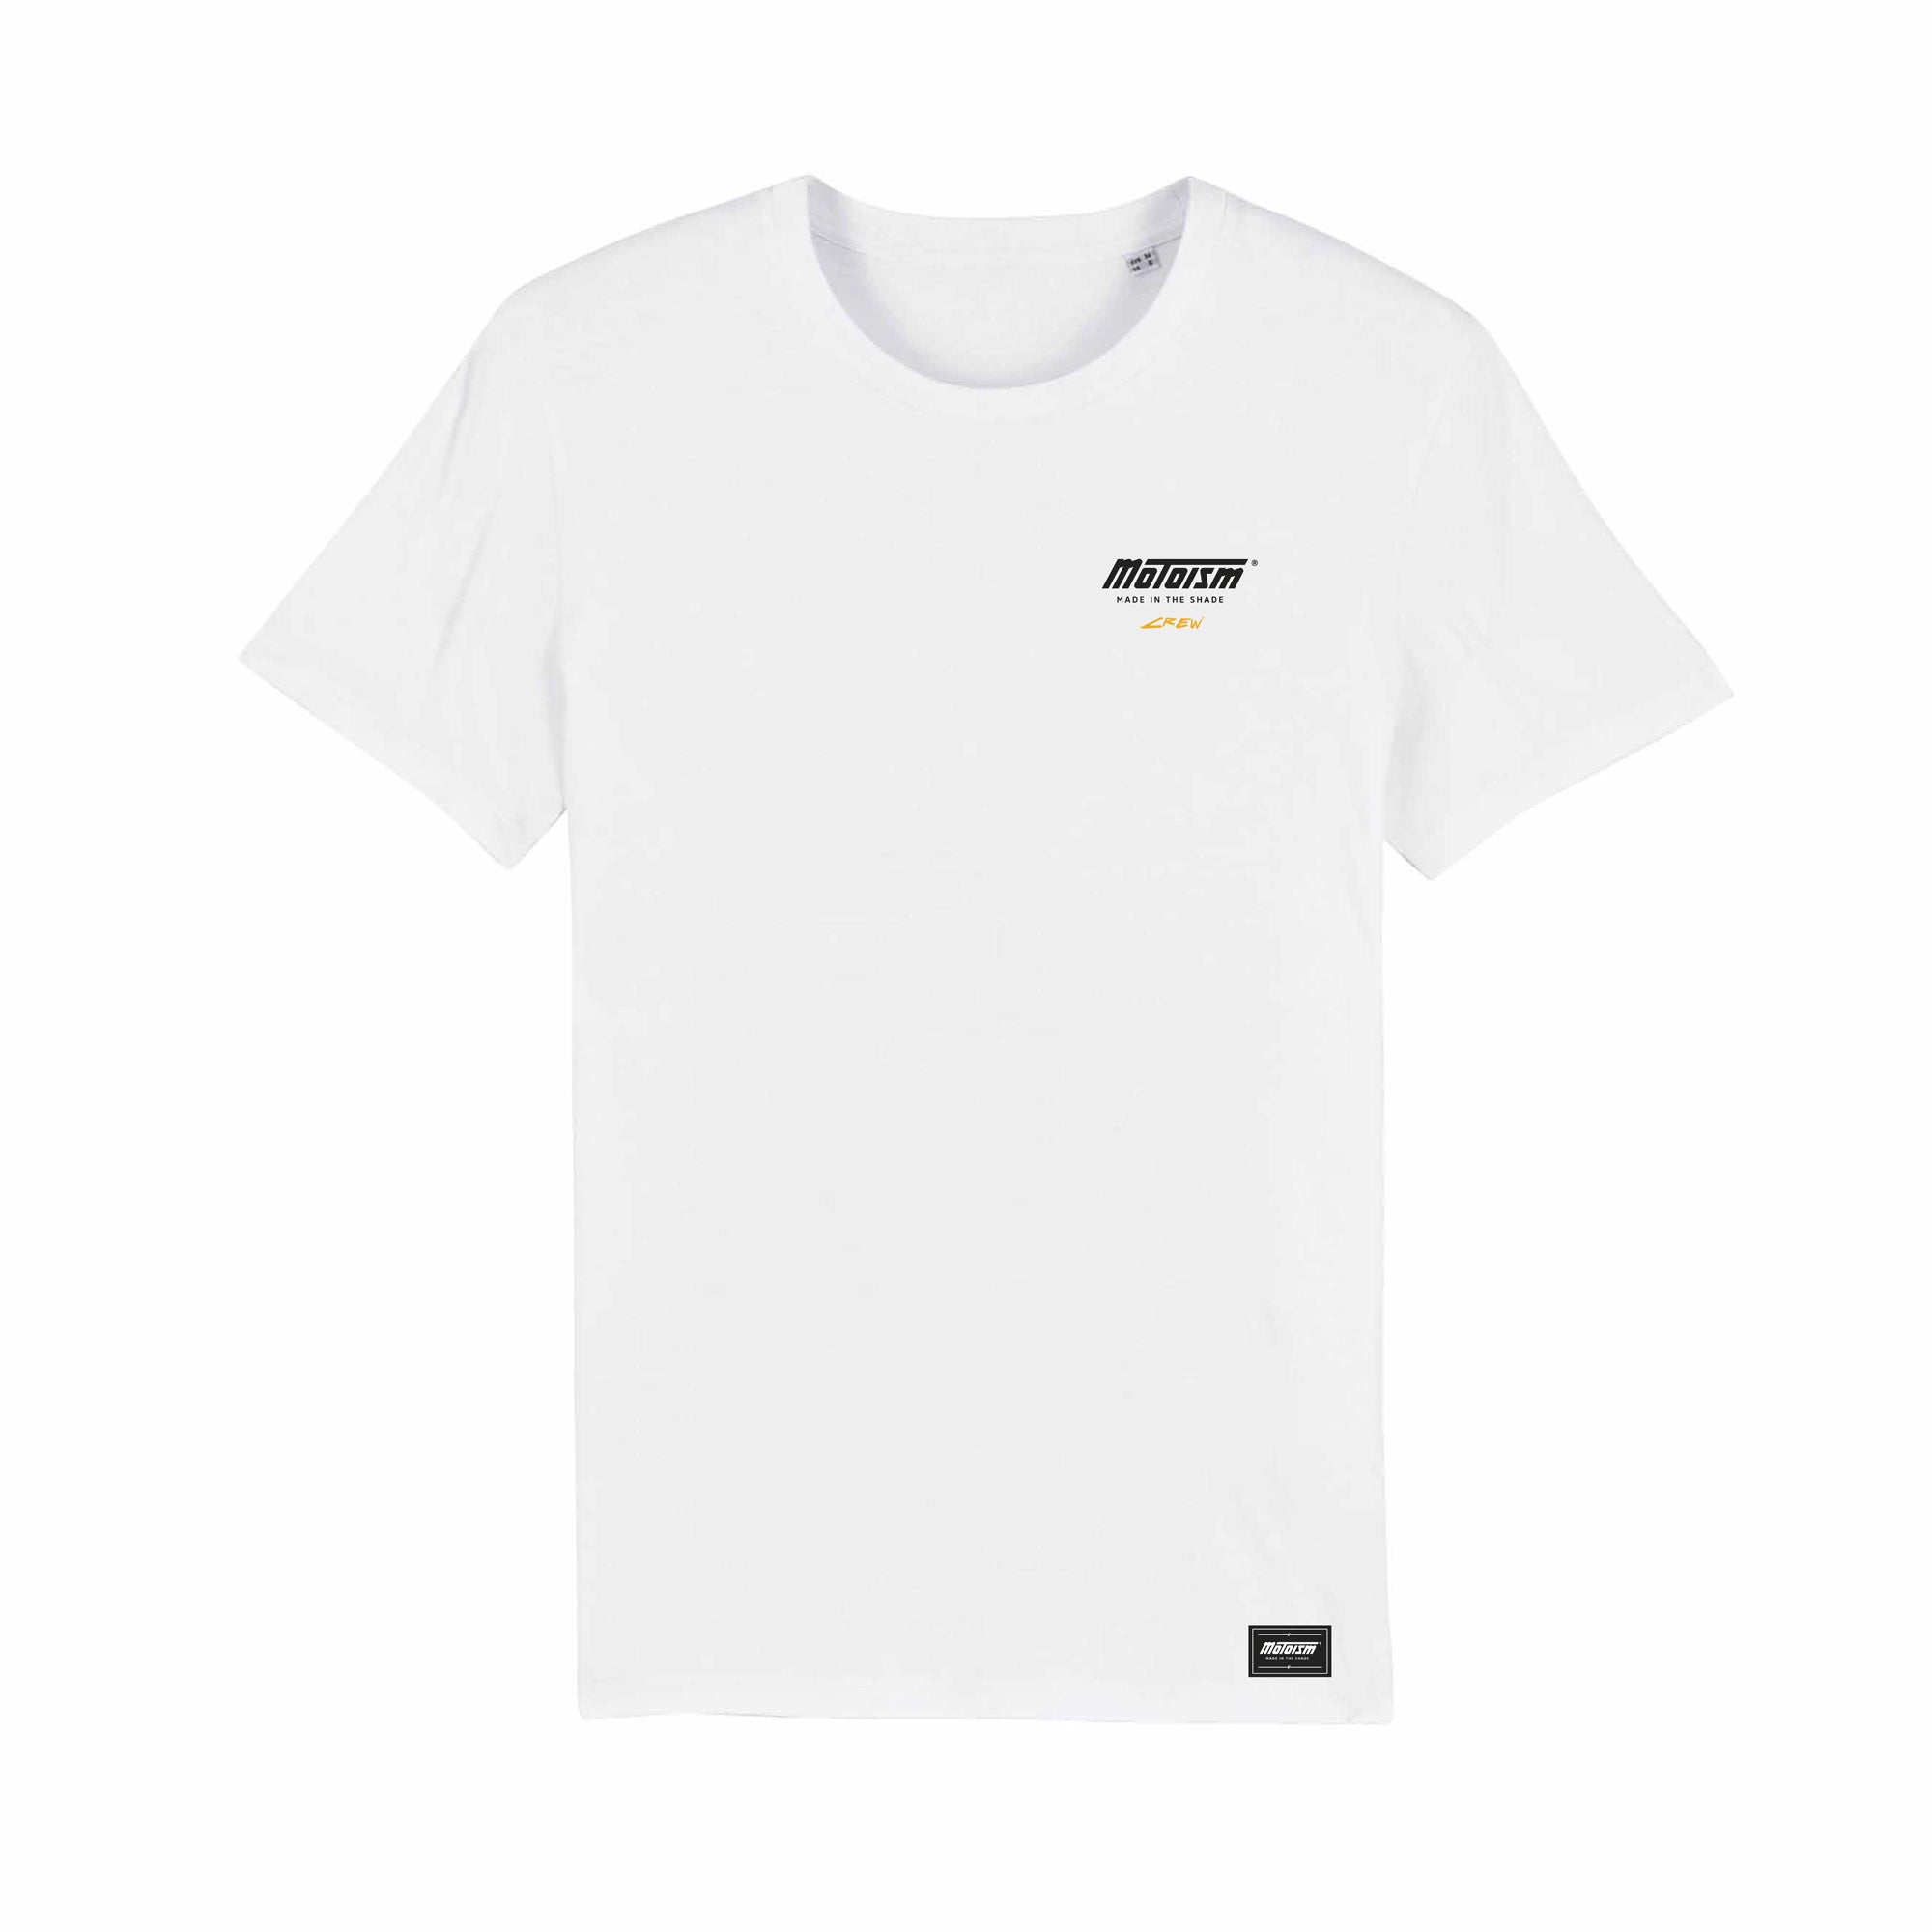 MOTOISM CREW Shirt White Unisex